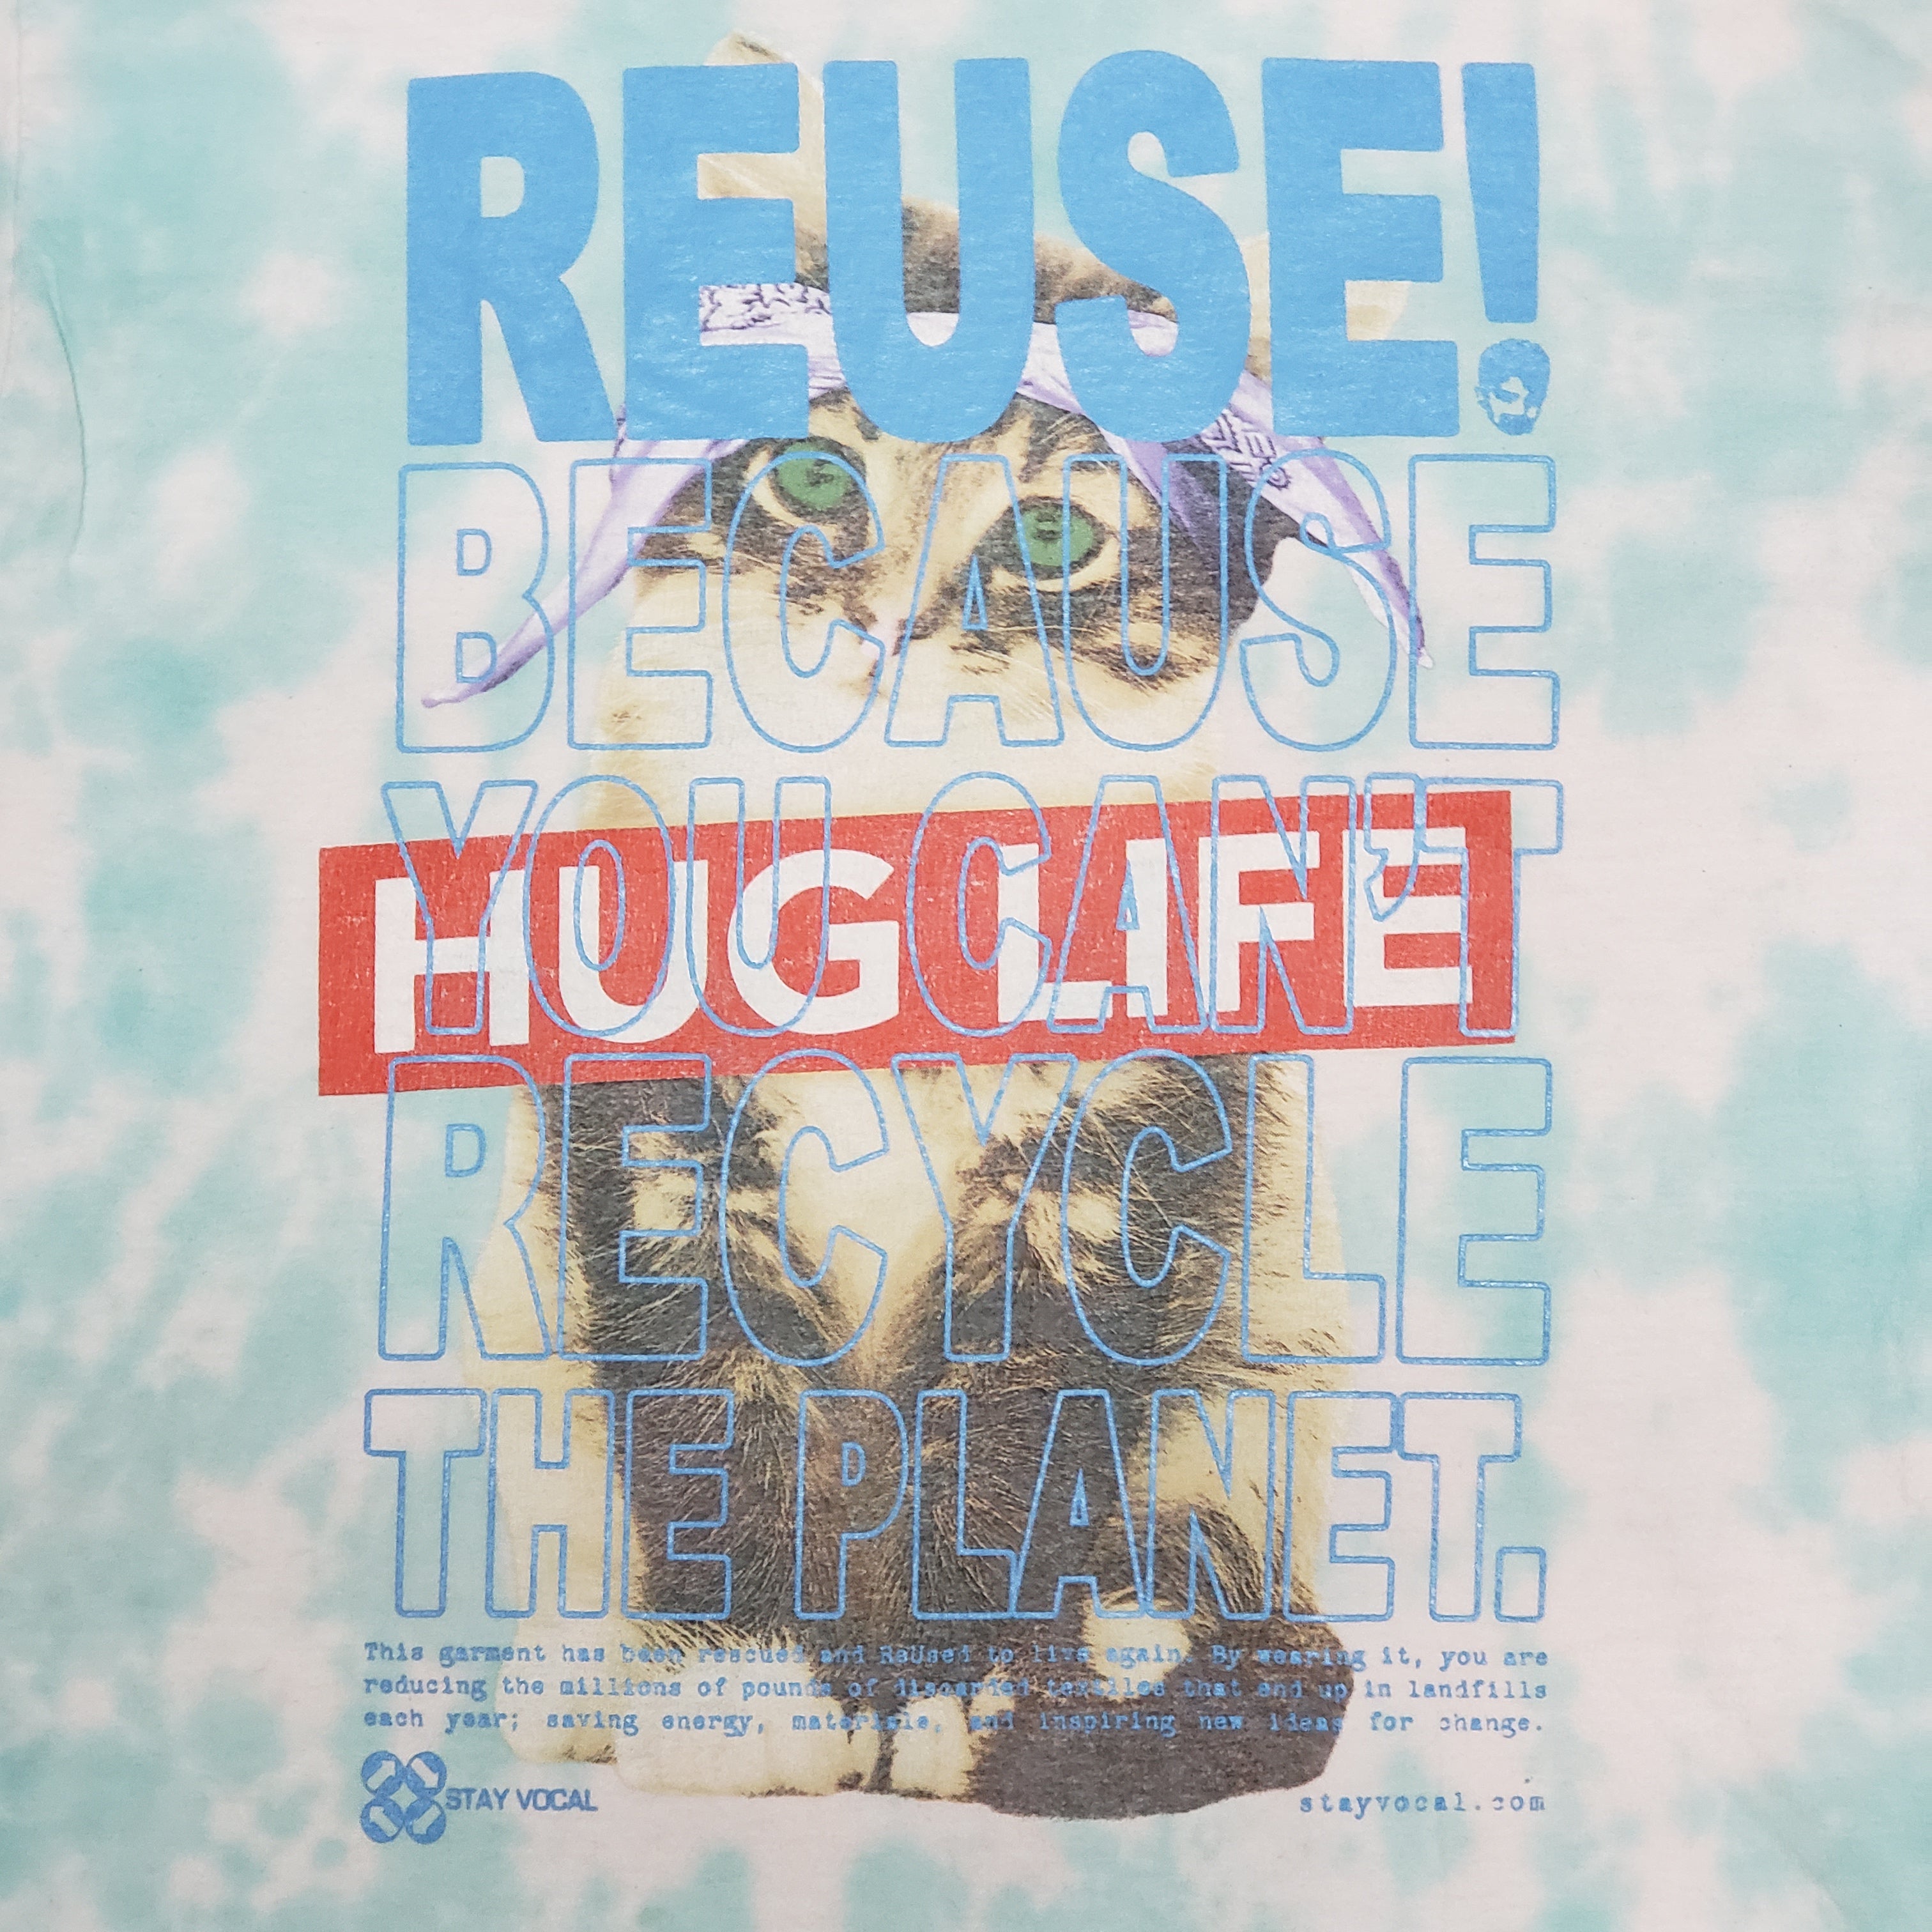 One of a Kind (Men's M) REUSE! Hug Life Cat T-Shirt